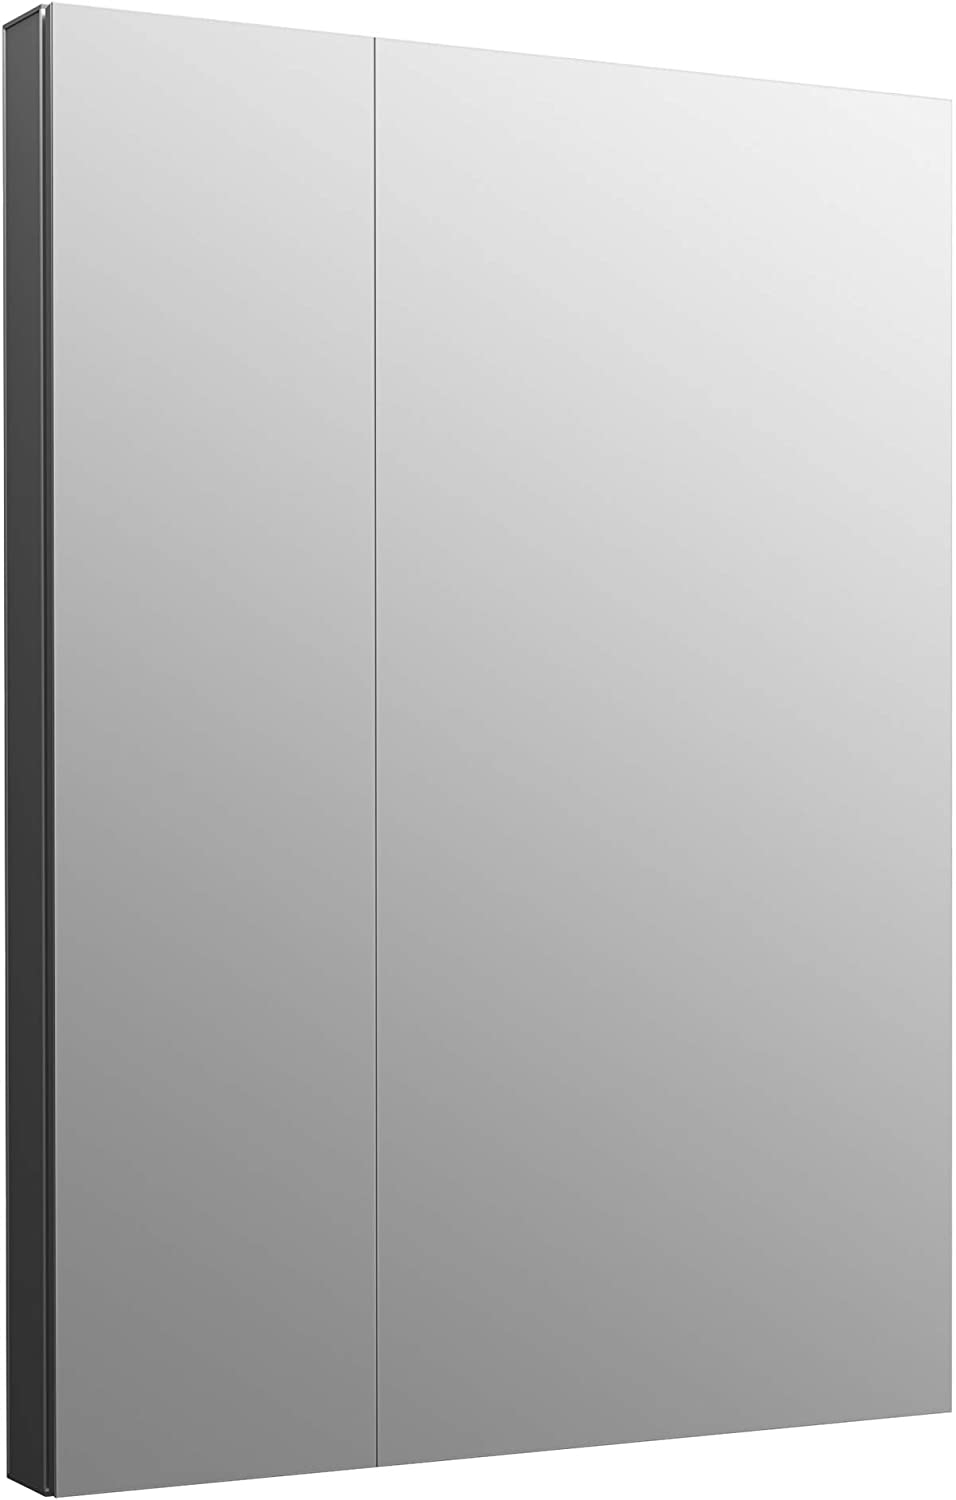 Kohler Maxstow Mirror Cabinets 762mm x 1016mm K-81149-DA1